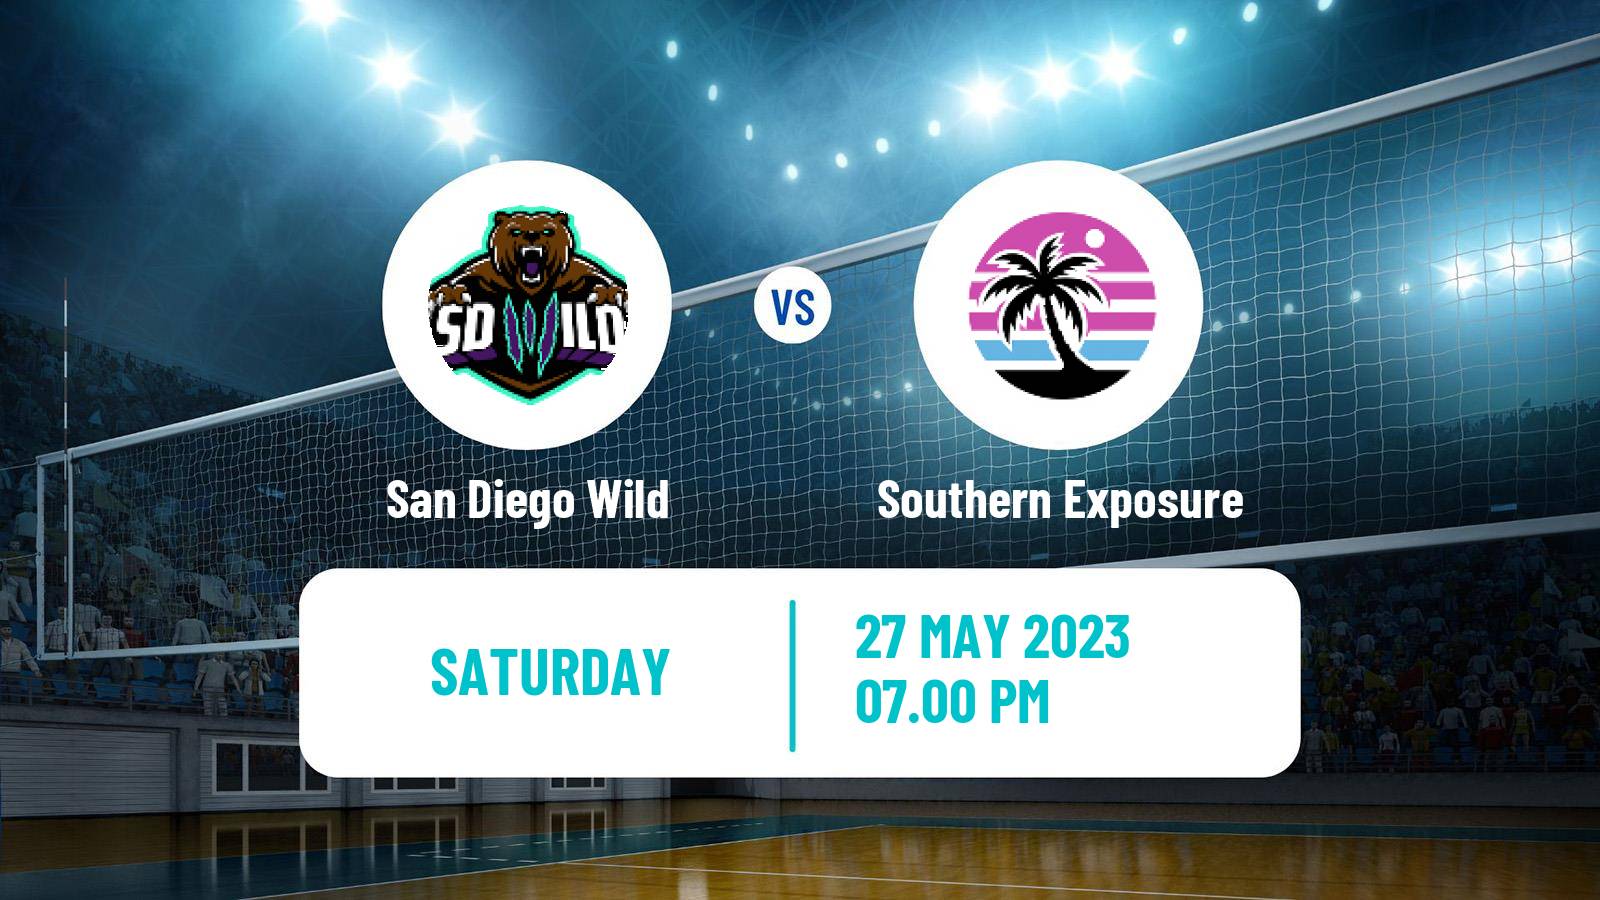 Volleyball NVA San Diego Wild - Southern Exposure